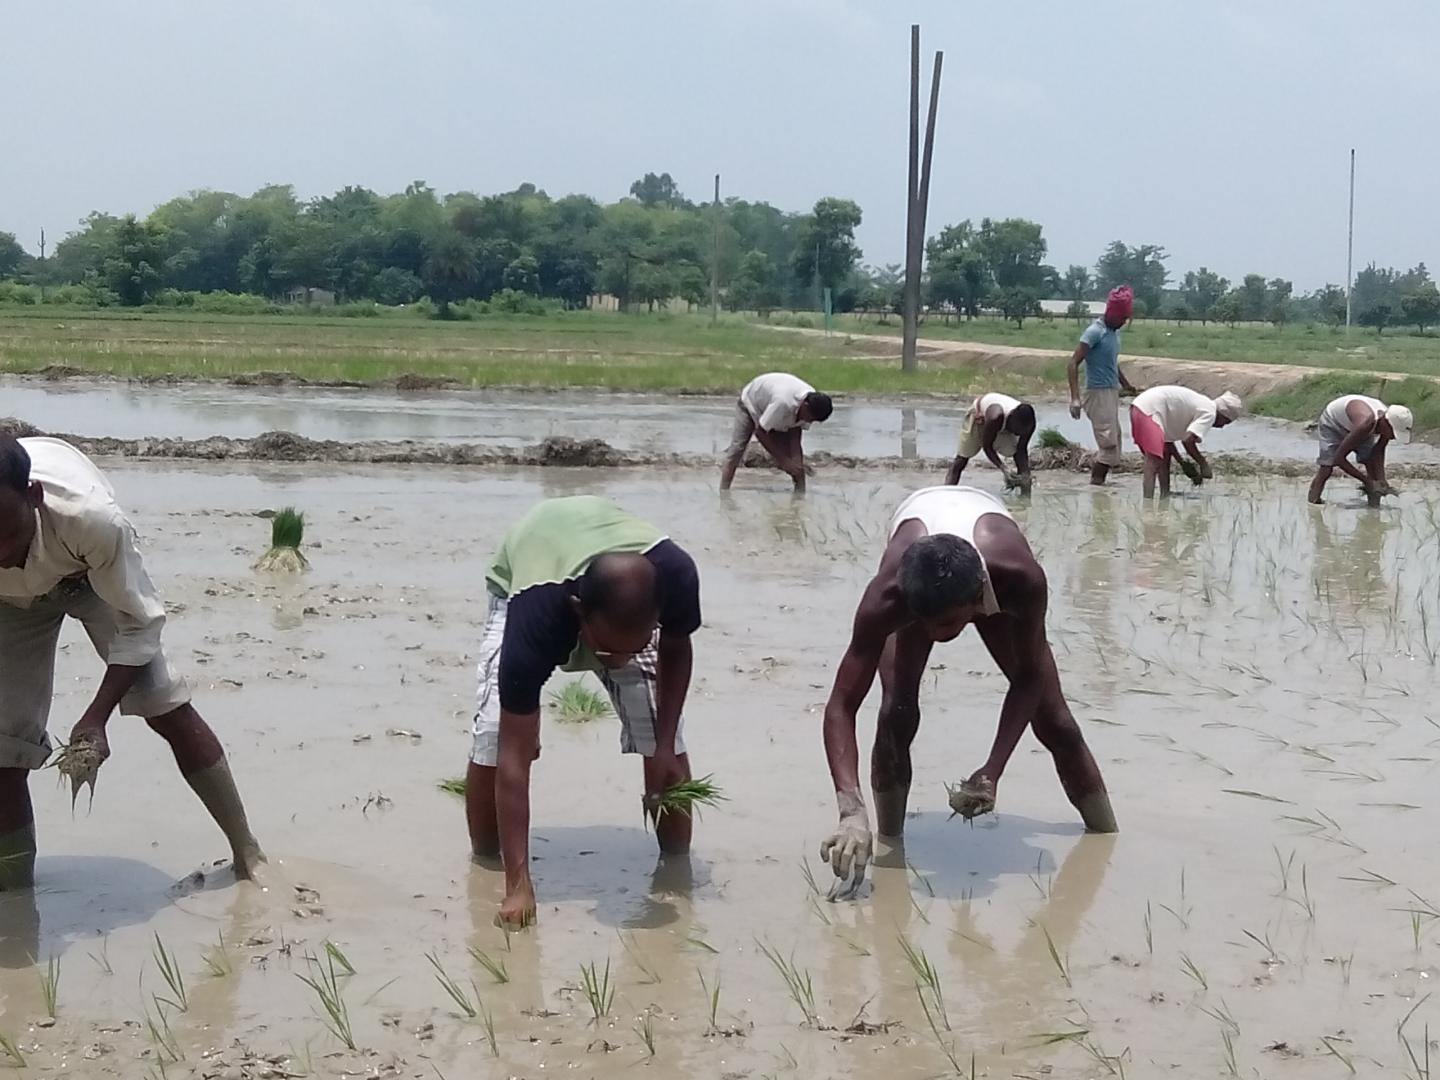 rice transplanting in Bihar, India